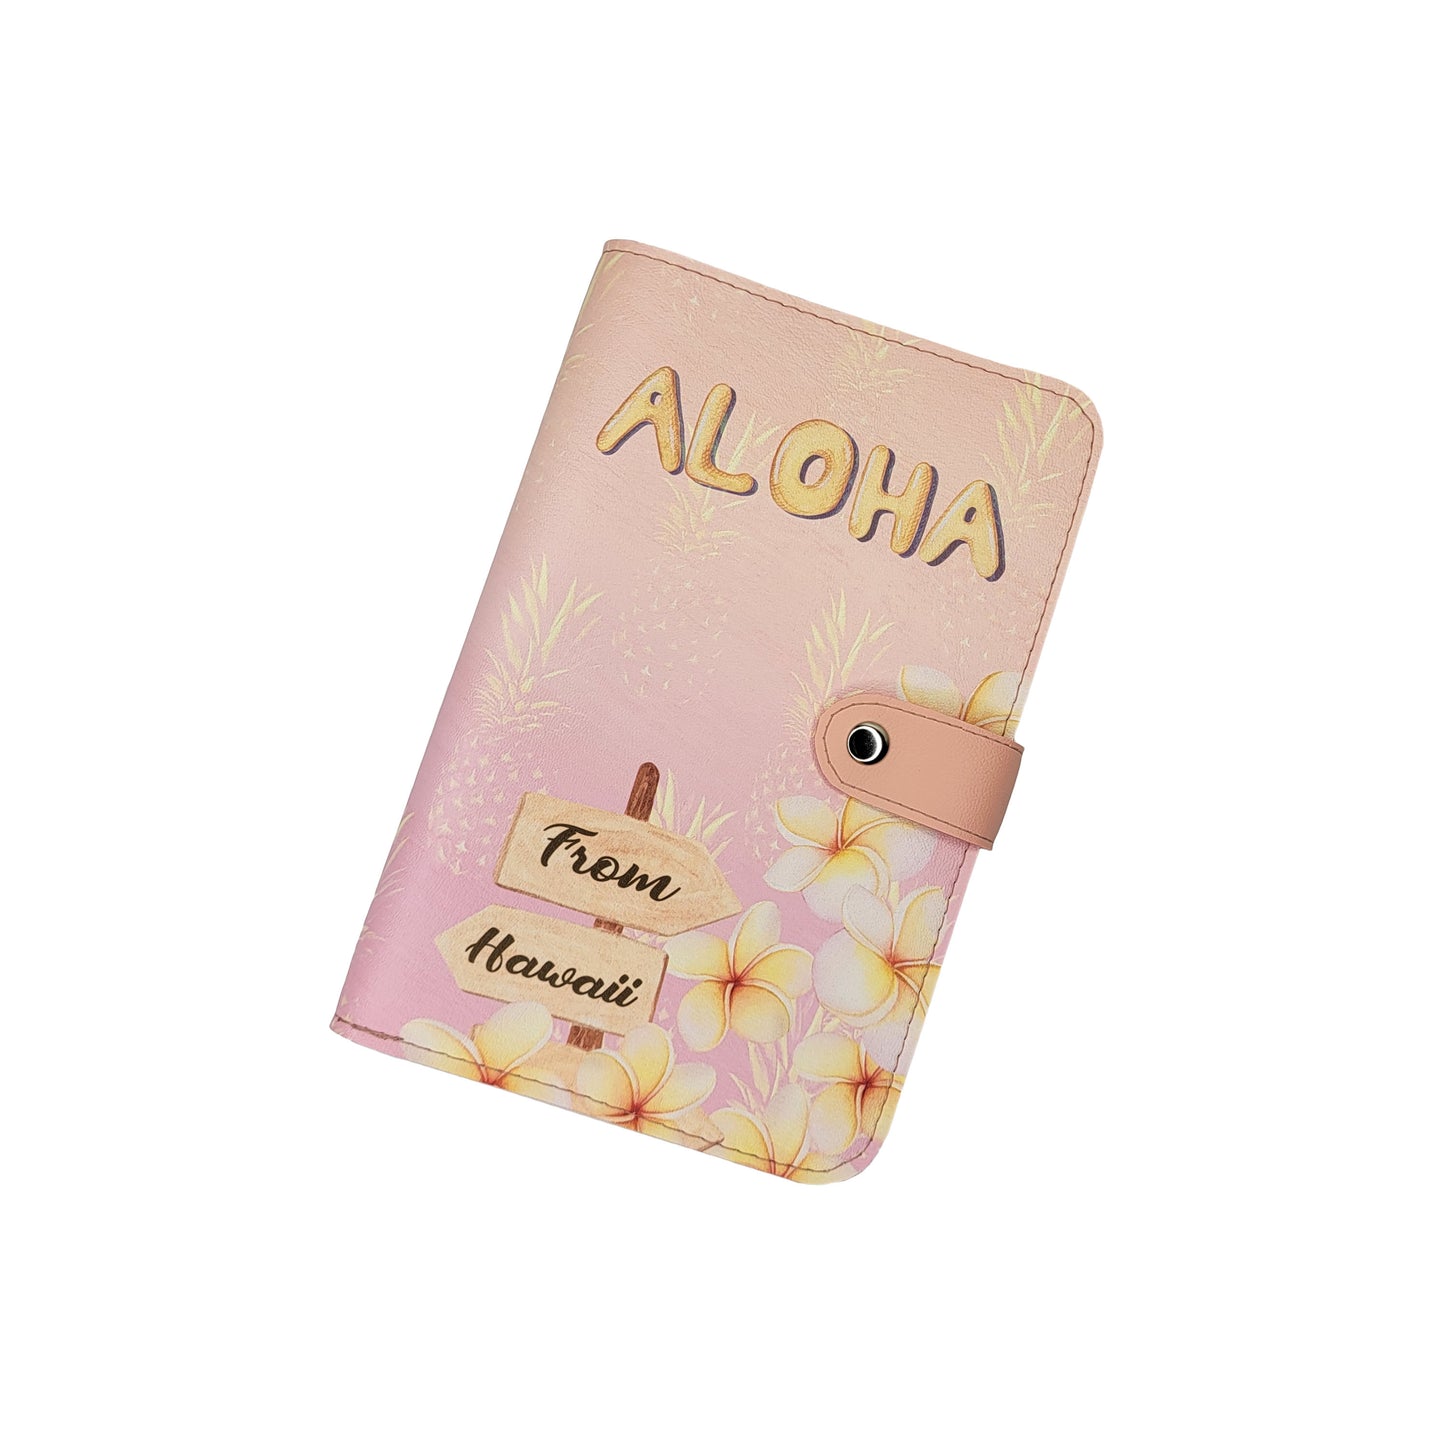 Aloha from Hawaii- Notebook & Cover